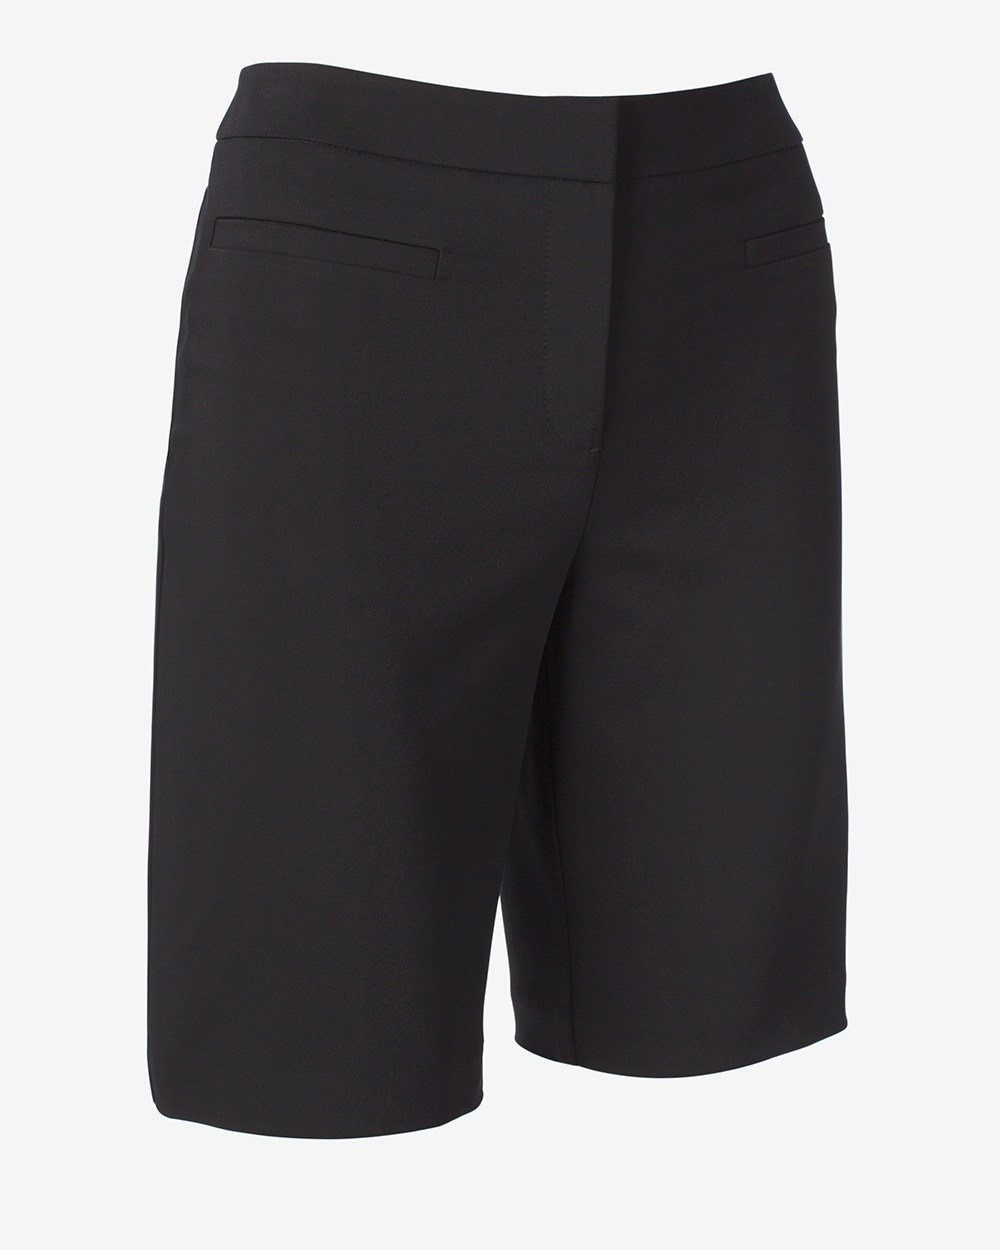 Darcy Shorts- 10 Inch Inseam